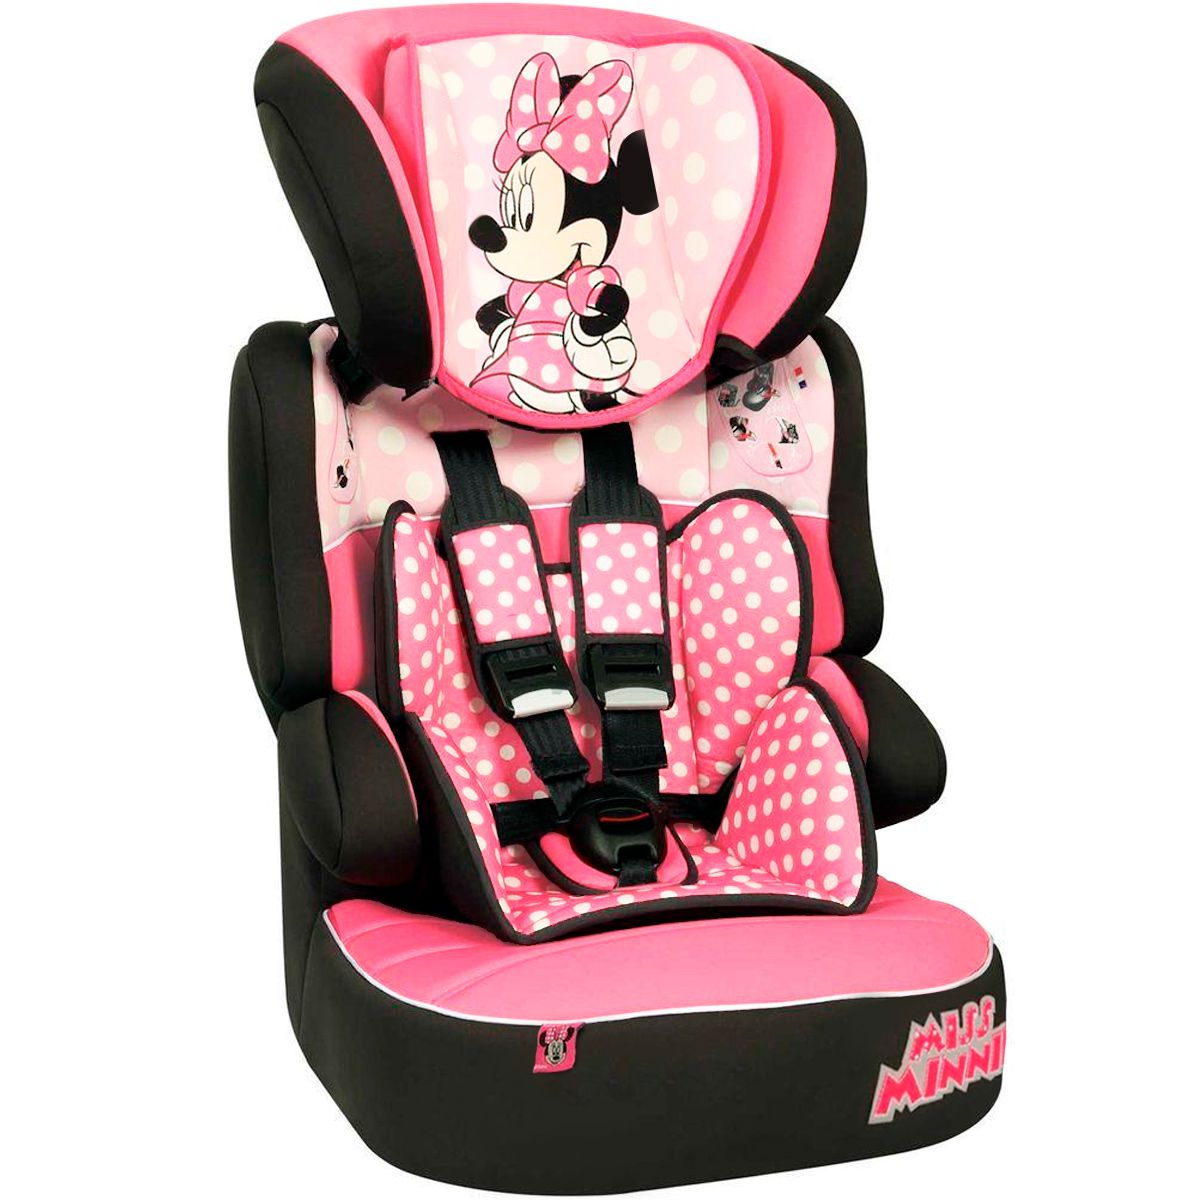 Minnie Mouse - Cadeira Auto Beline SP Luxe Grupo 1-2-3 (de 9 a 36 kg), Cadeiras Auto GRUPO 1/2/3